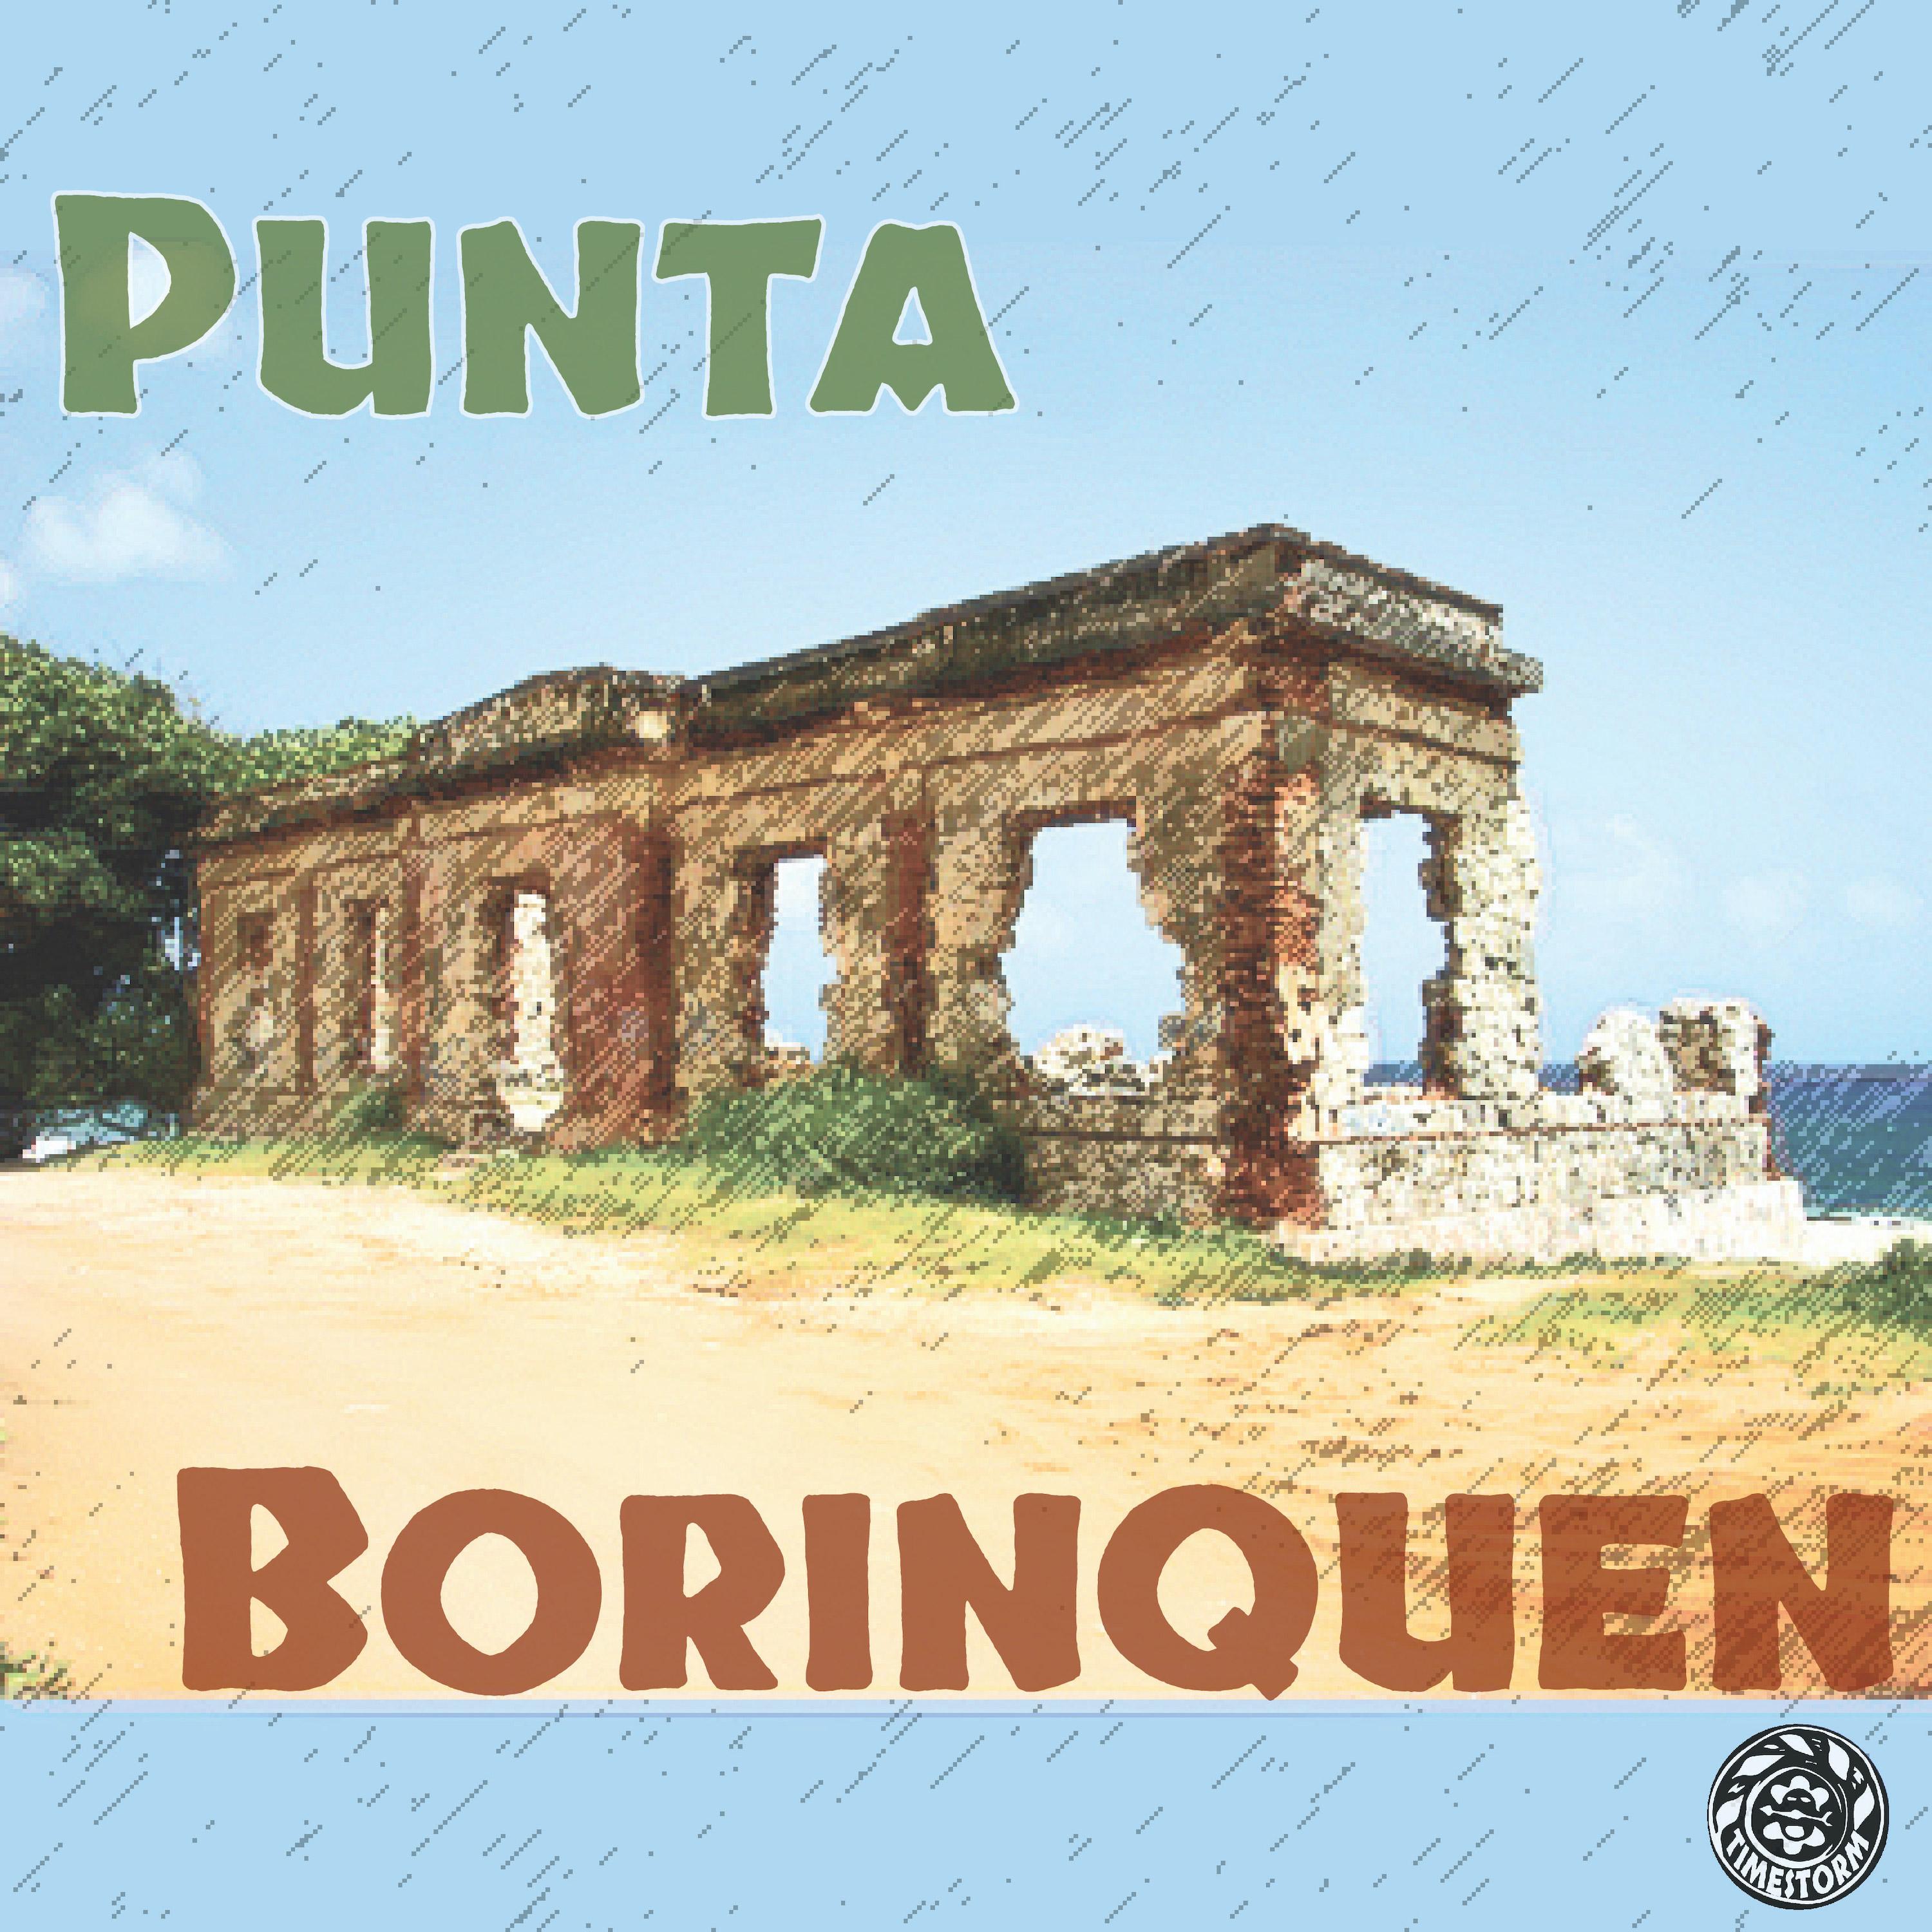 Thumbnail for "Episode 22: Punta Borinquen".